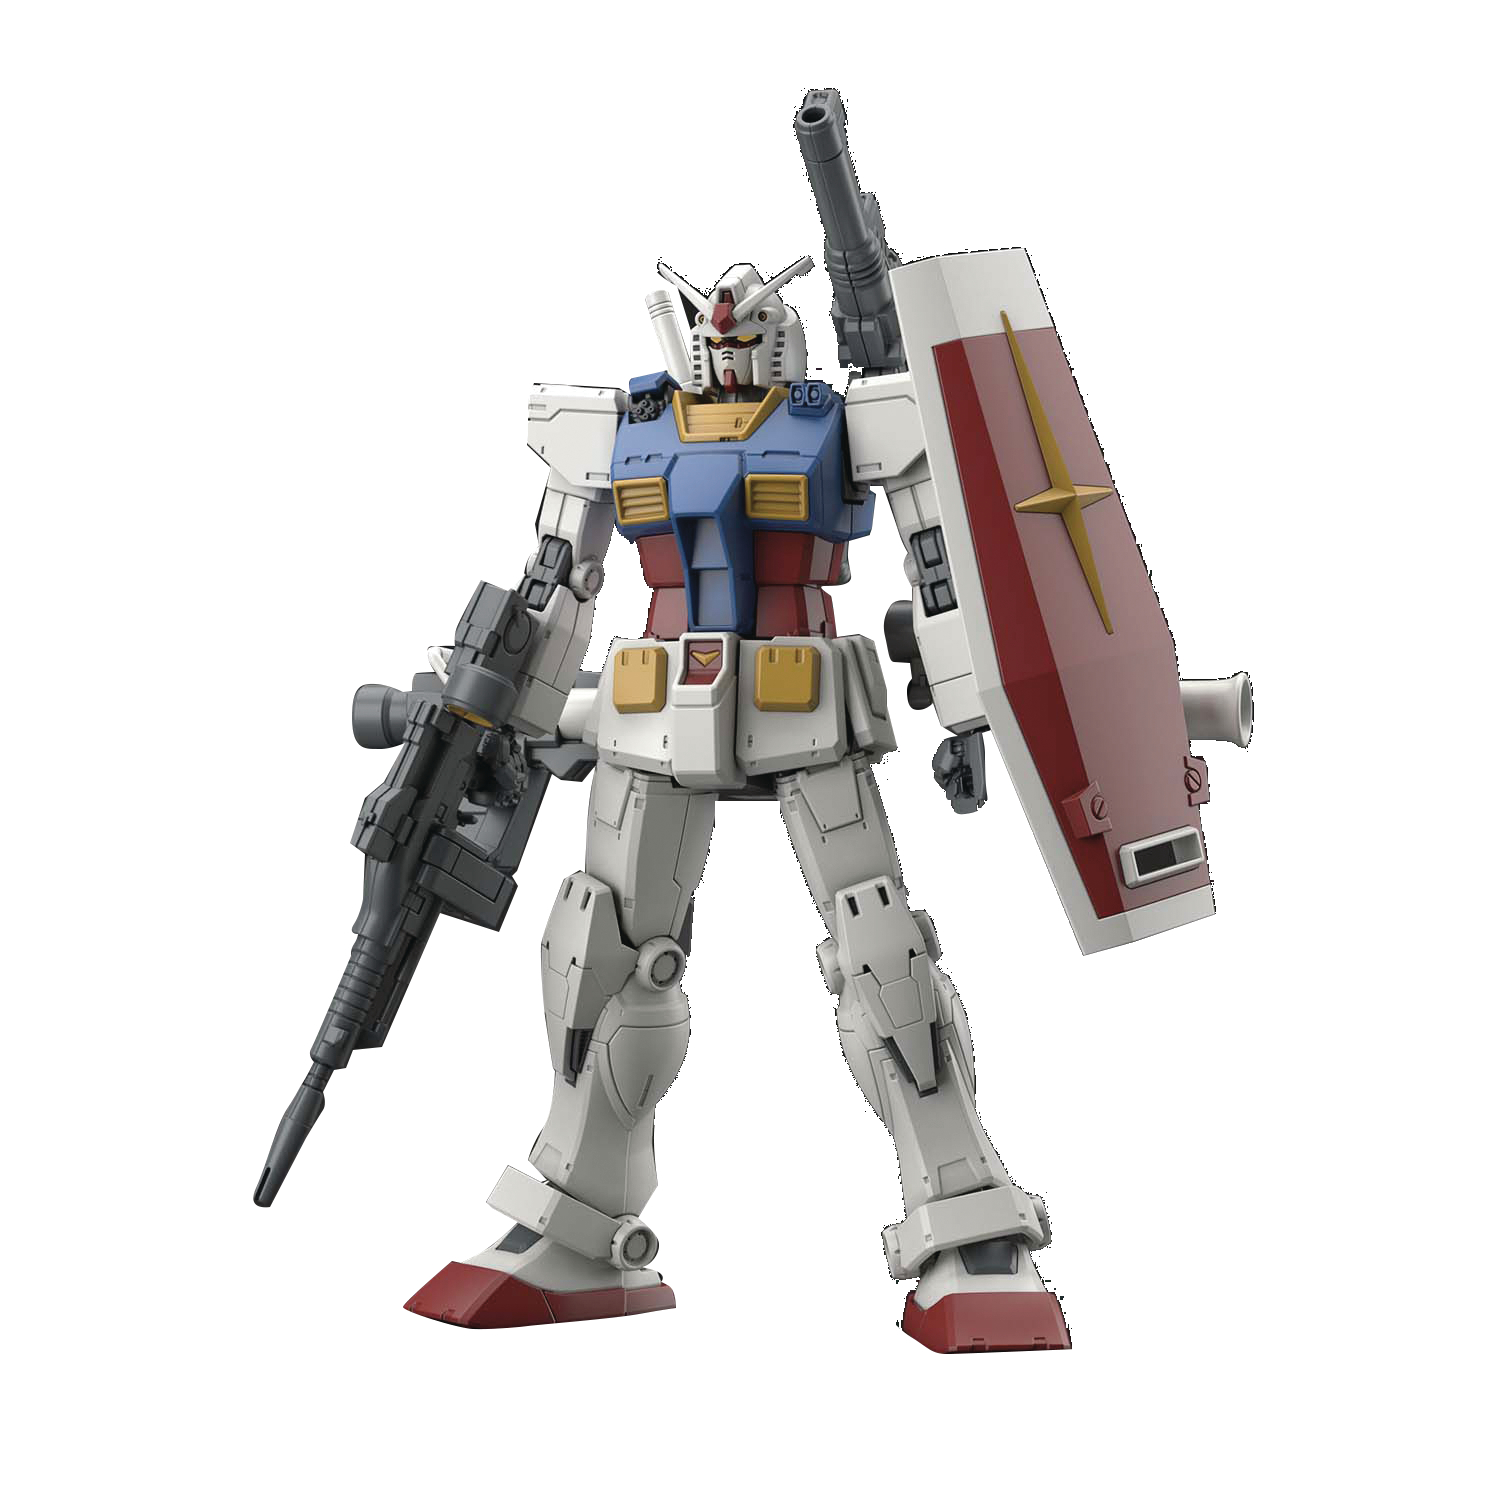 Mobile Suit Gundam RX-78-02 Gundam The Origin Version High Grade 1:144 Scale Model Kit